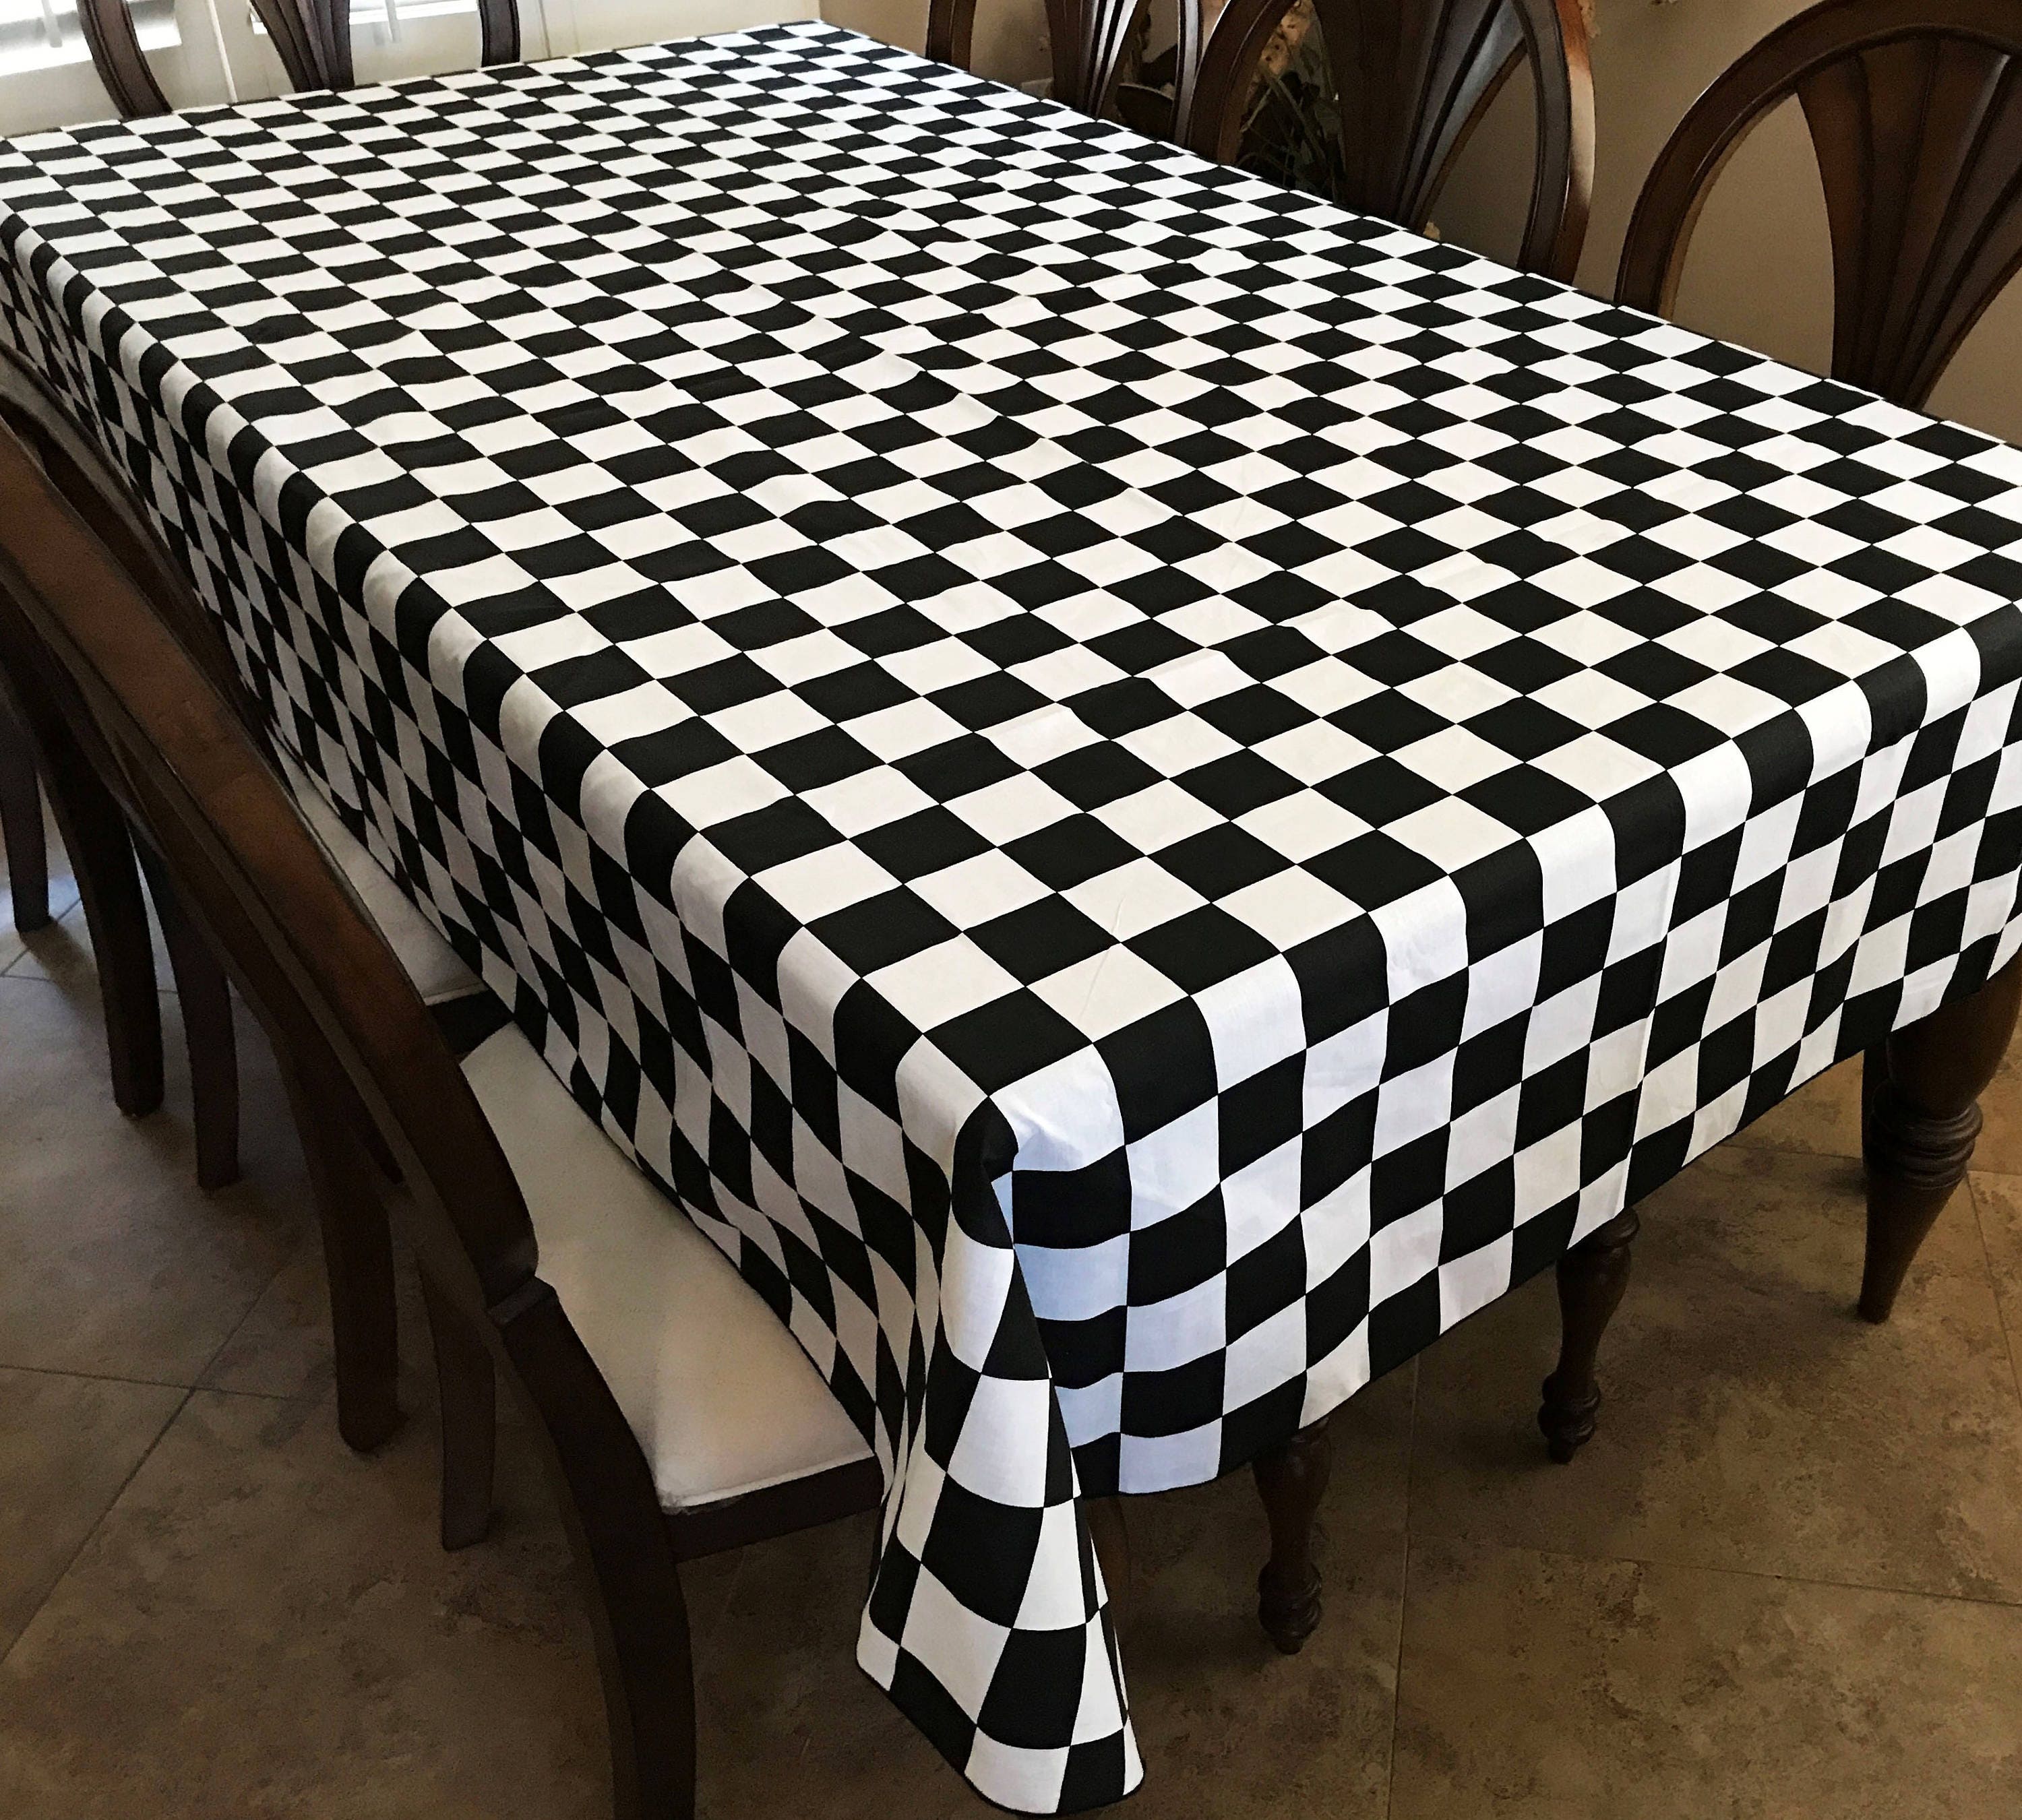 Lovemyfabric Cotton Blend 2 Inch Black & White Checkerboard Print Tablecloth For Wedding/Bridal Shower, Birthdays, Nascar Party